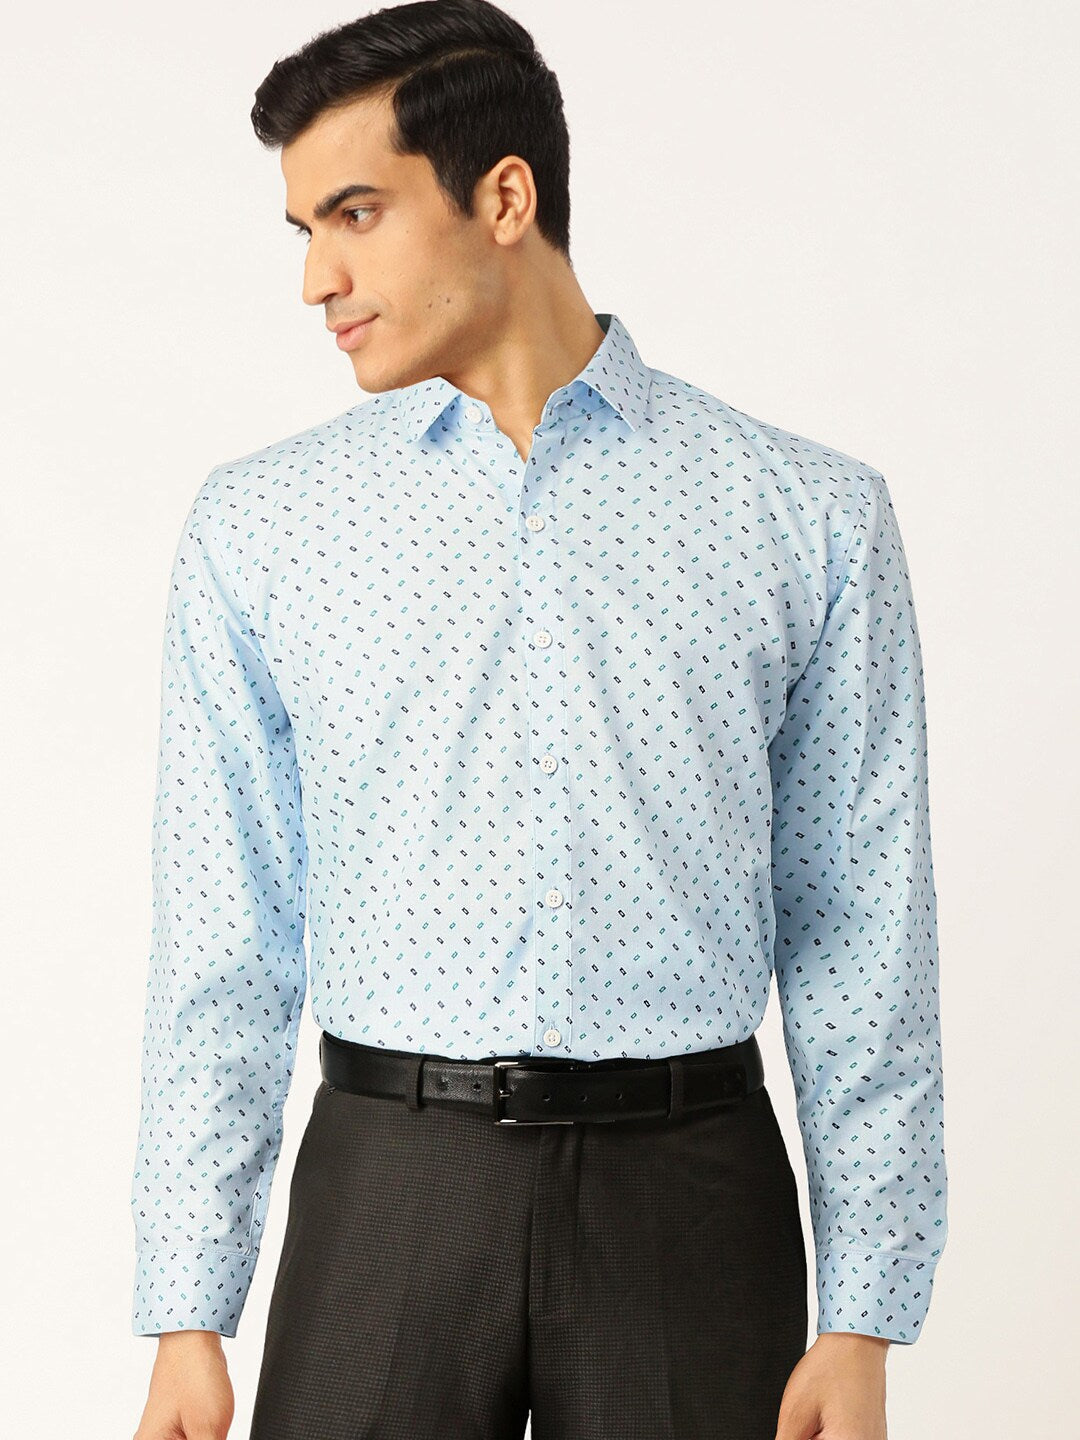 Men's Blue Cotton Printed Formal Shirts ( SF 716Sky ) - Jainish